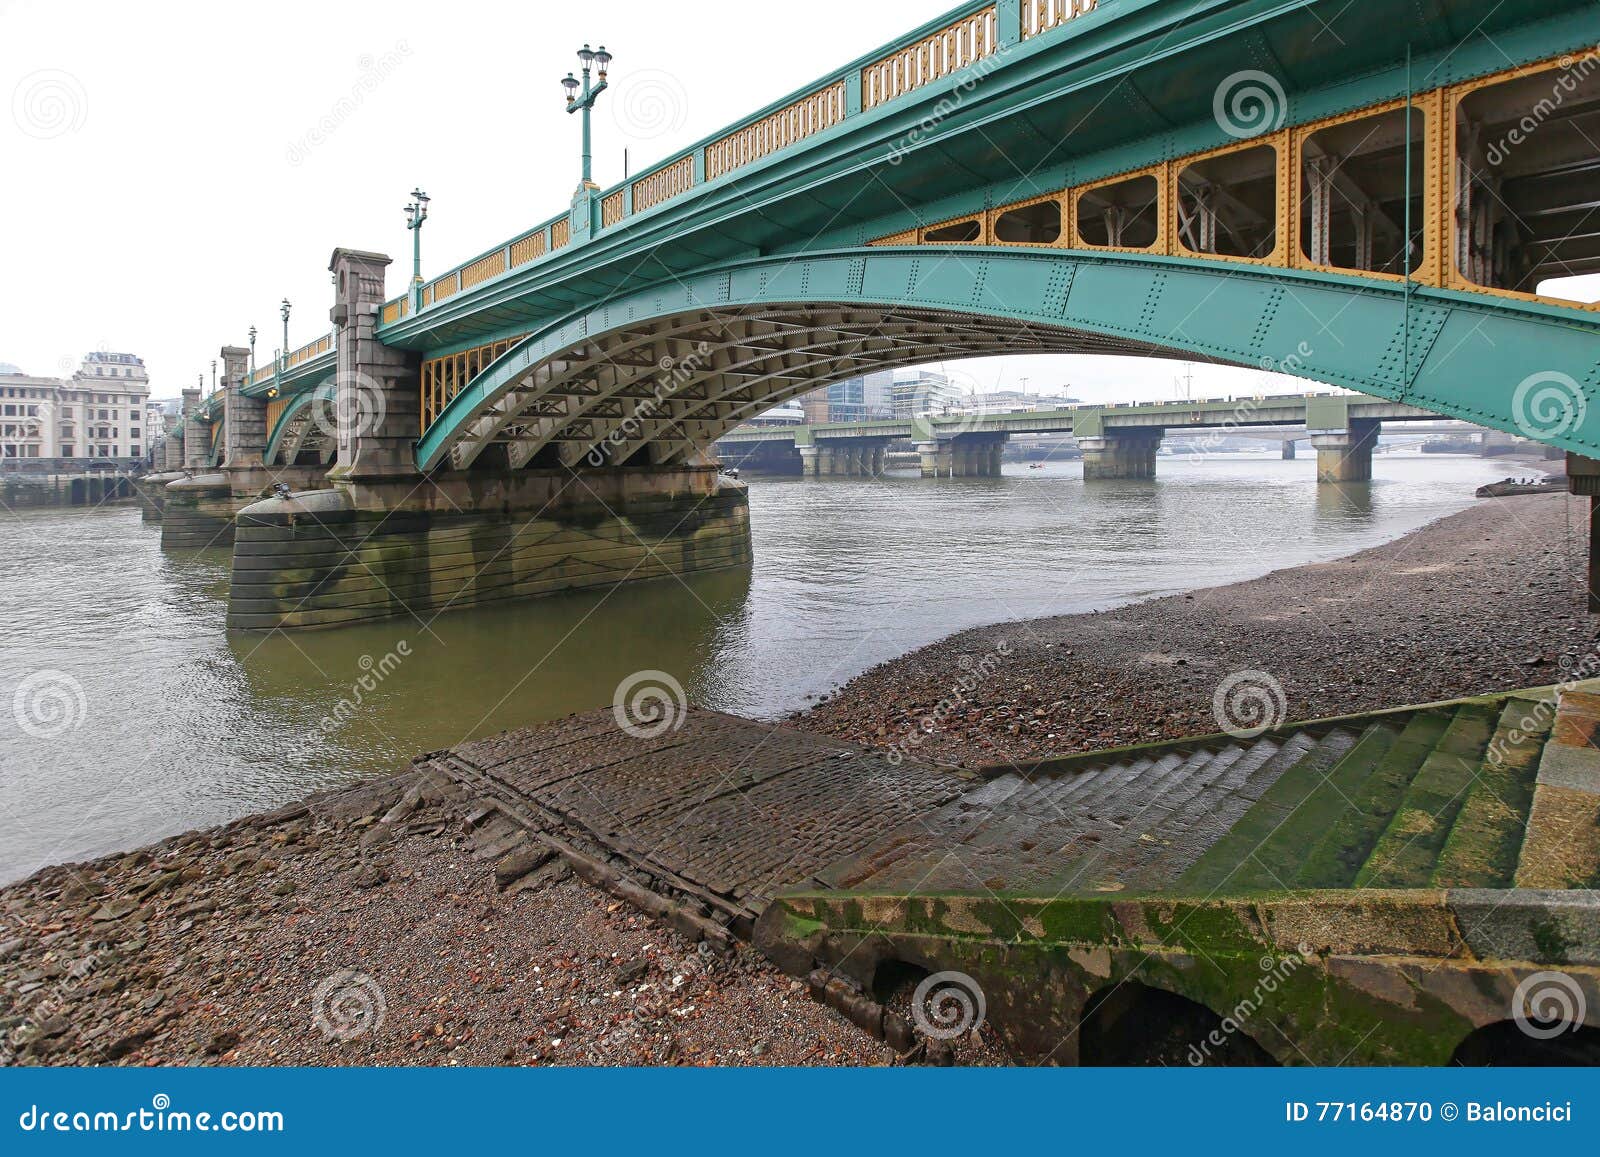 southwark bridge london